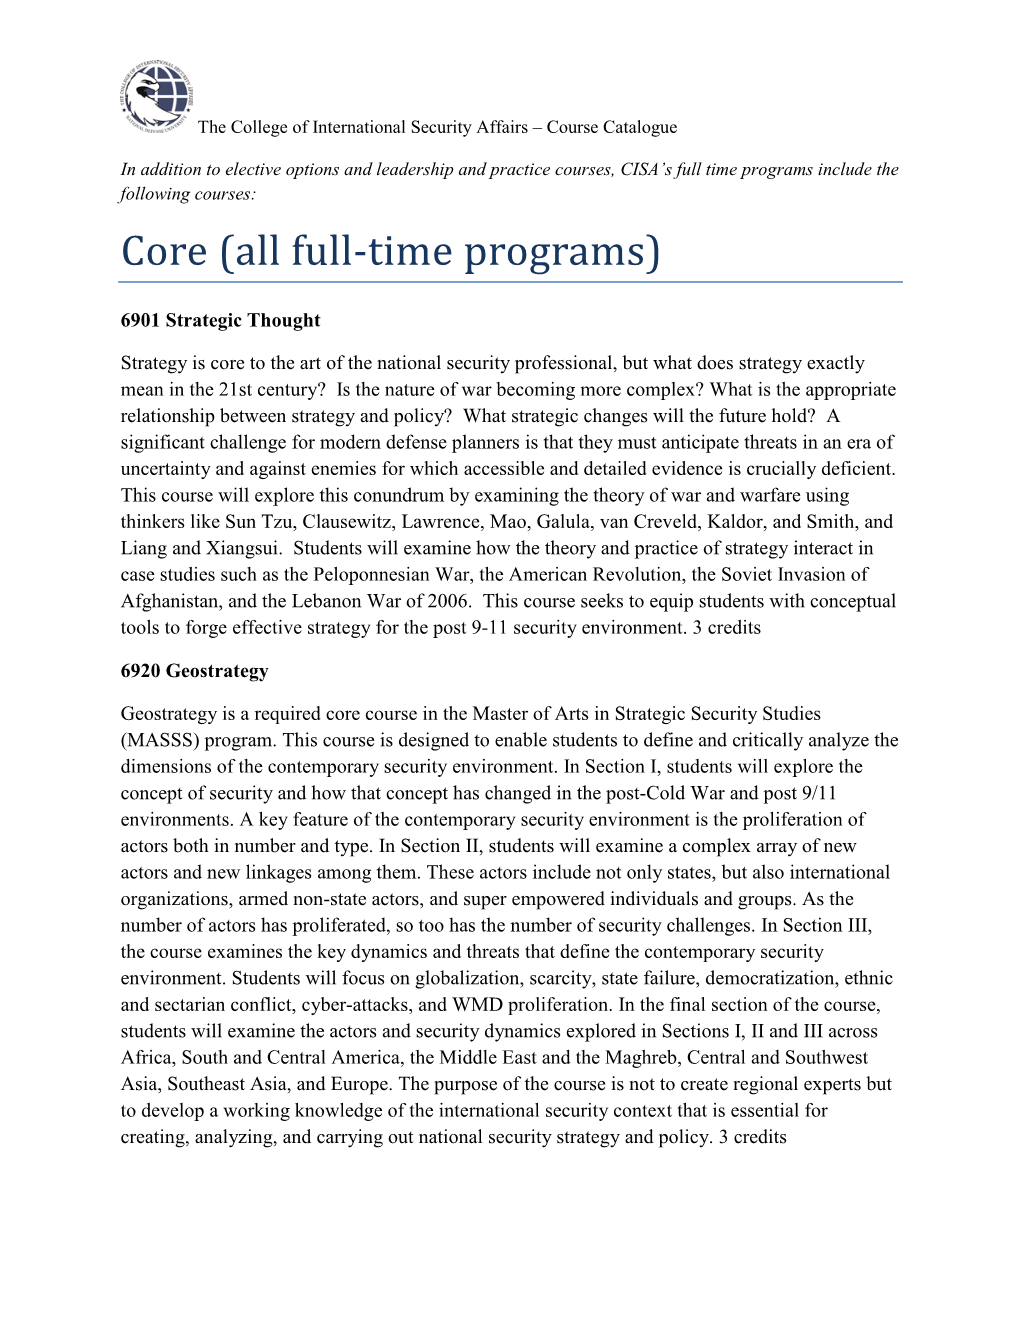 Core (All Full-Time Programs)